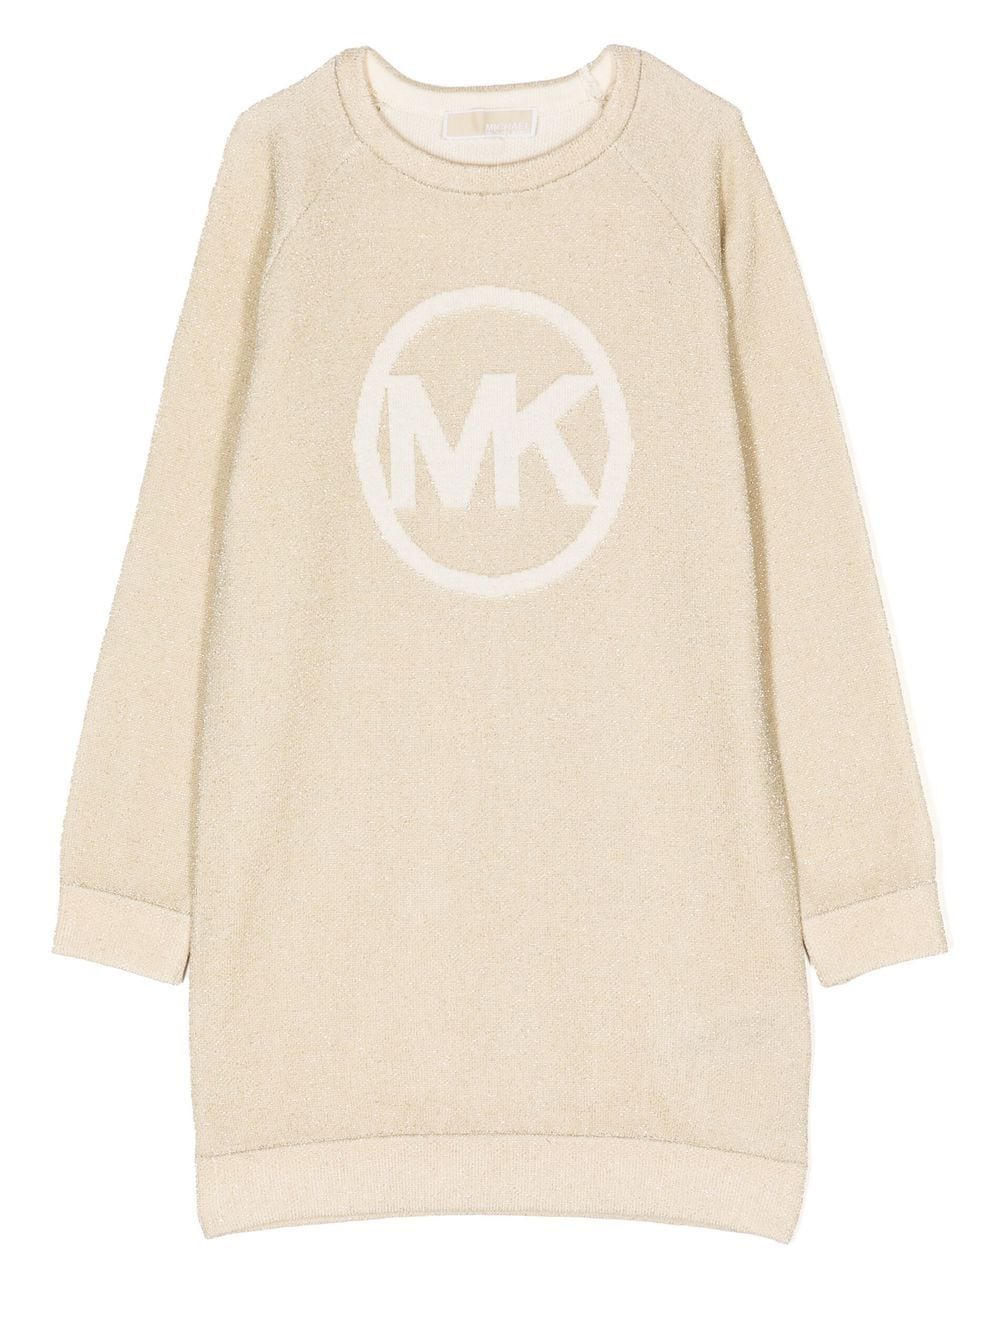 Michael Kors Kids embroidered-logo sweater dress - Gold